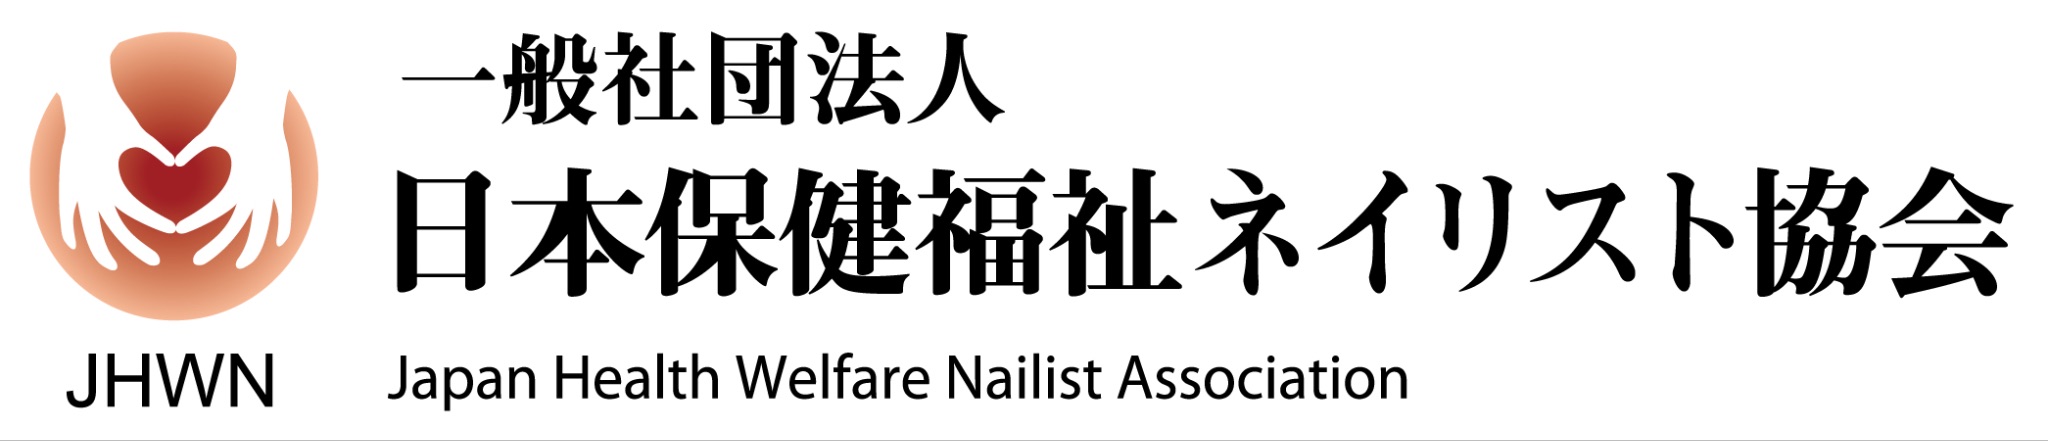 一般社団法人 日本保健福祉ネイリスト協会